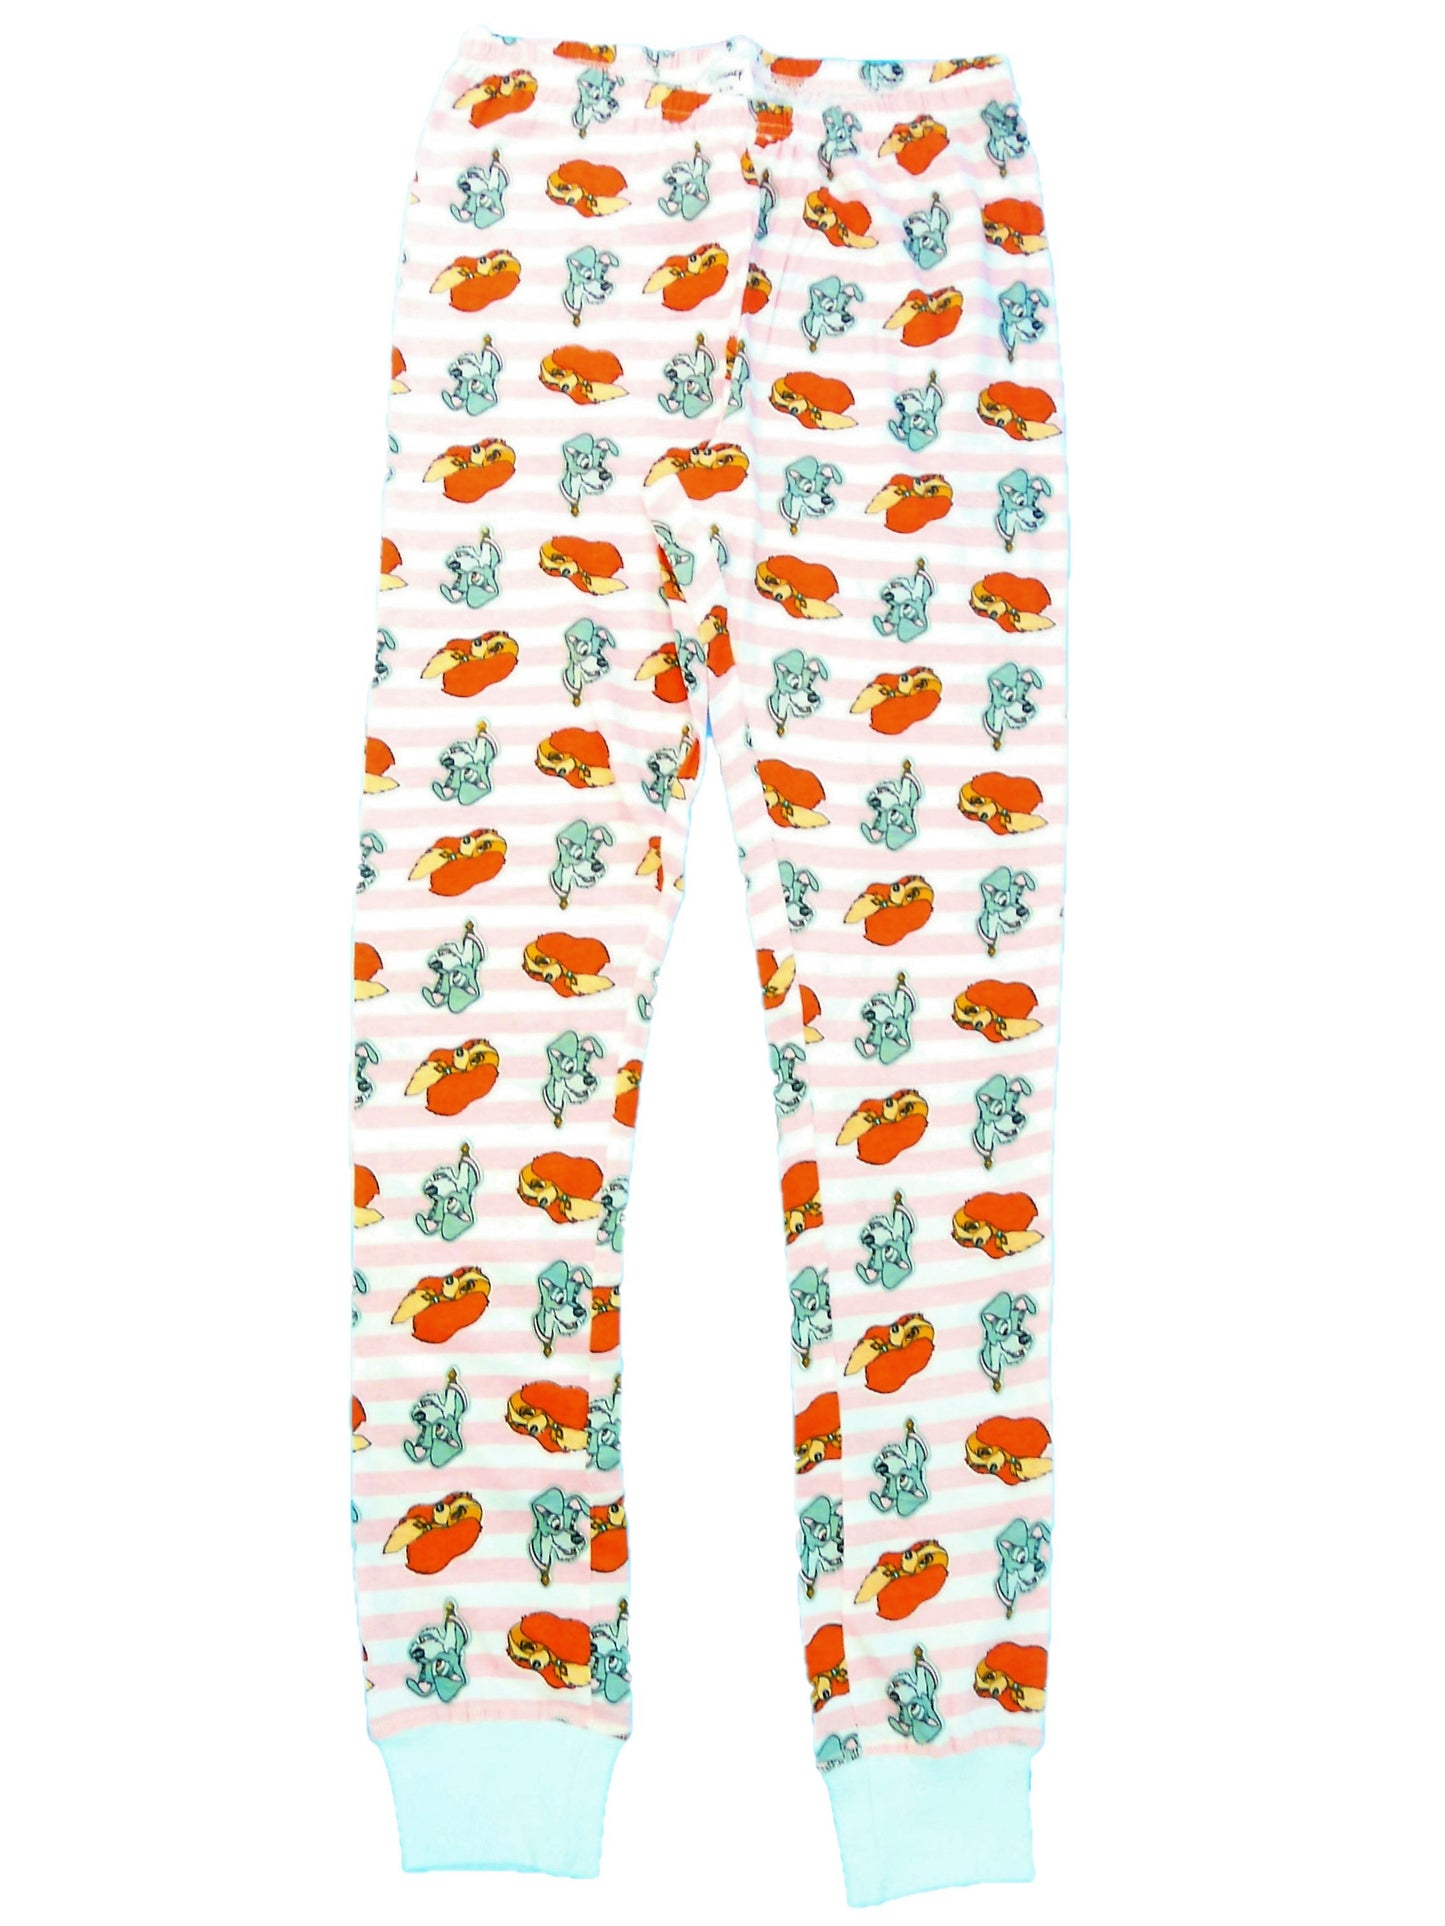 Lady and the Tramp “Spaghetti” Ladies Pyjama Set Size 8-10- Great Gift Idea